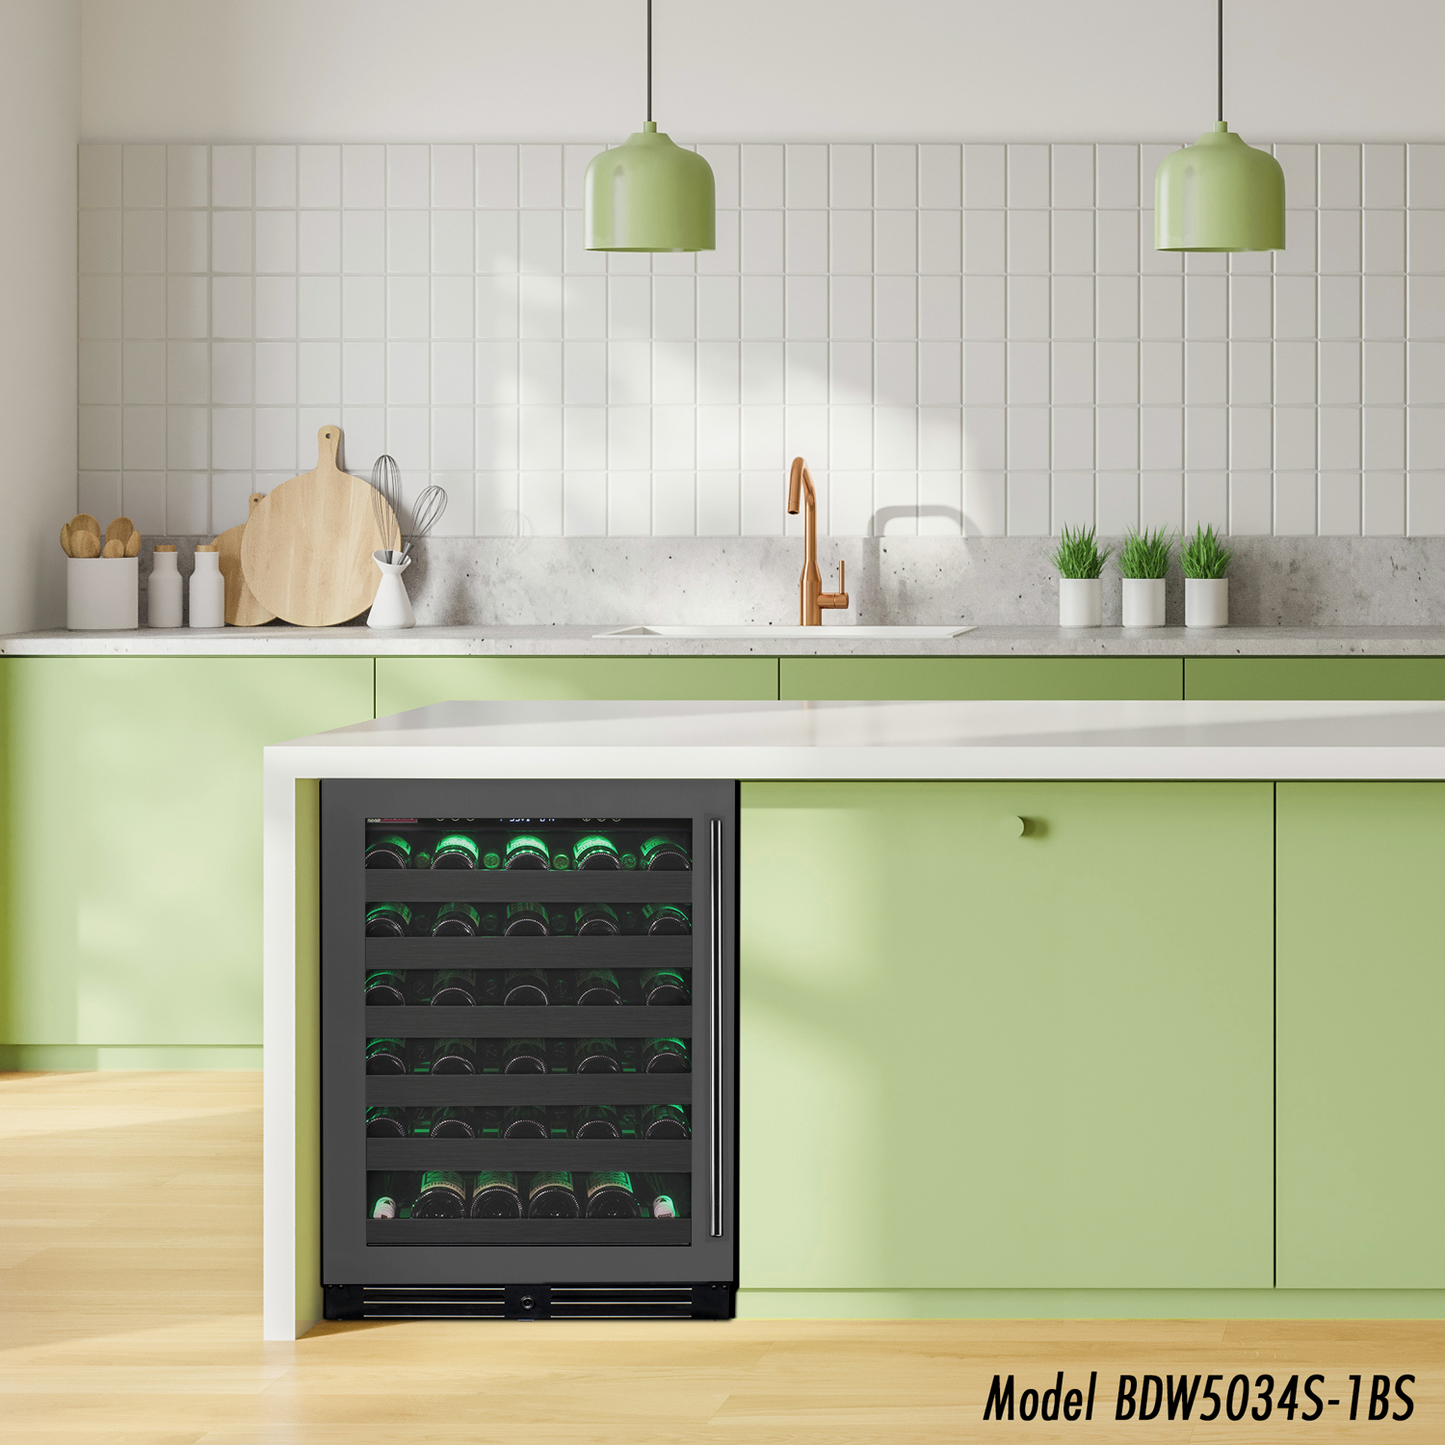 Allavino Reserva Series 50 Bottle Single Zone Built-in  Luxury Wine Refrigerator with Black Stainless Steel Door- Left Hinge